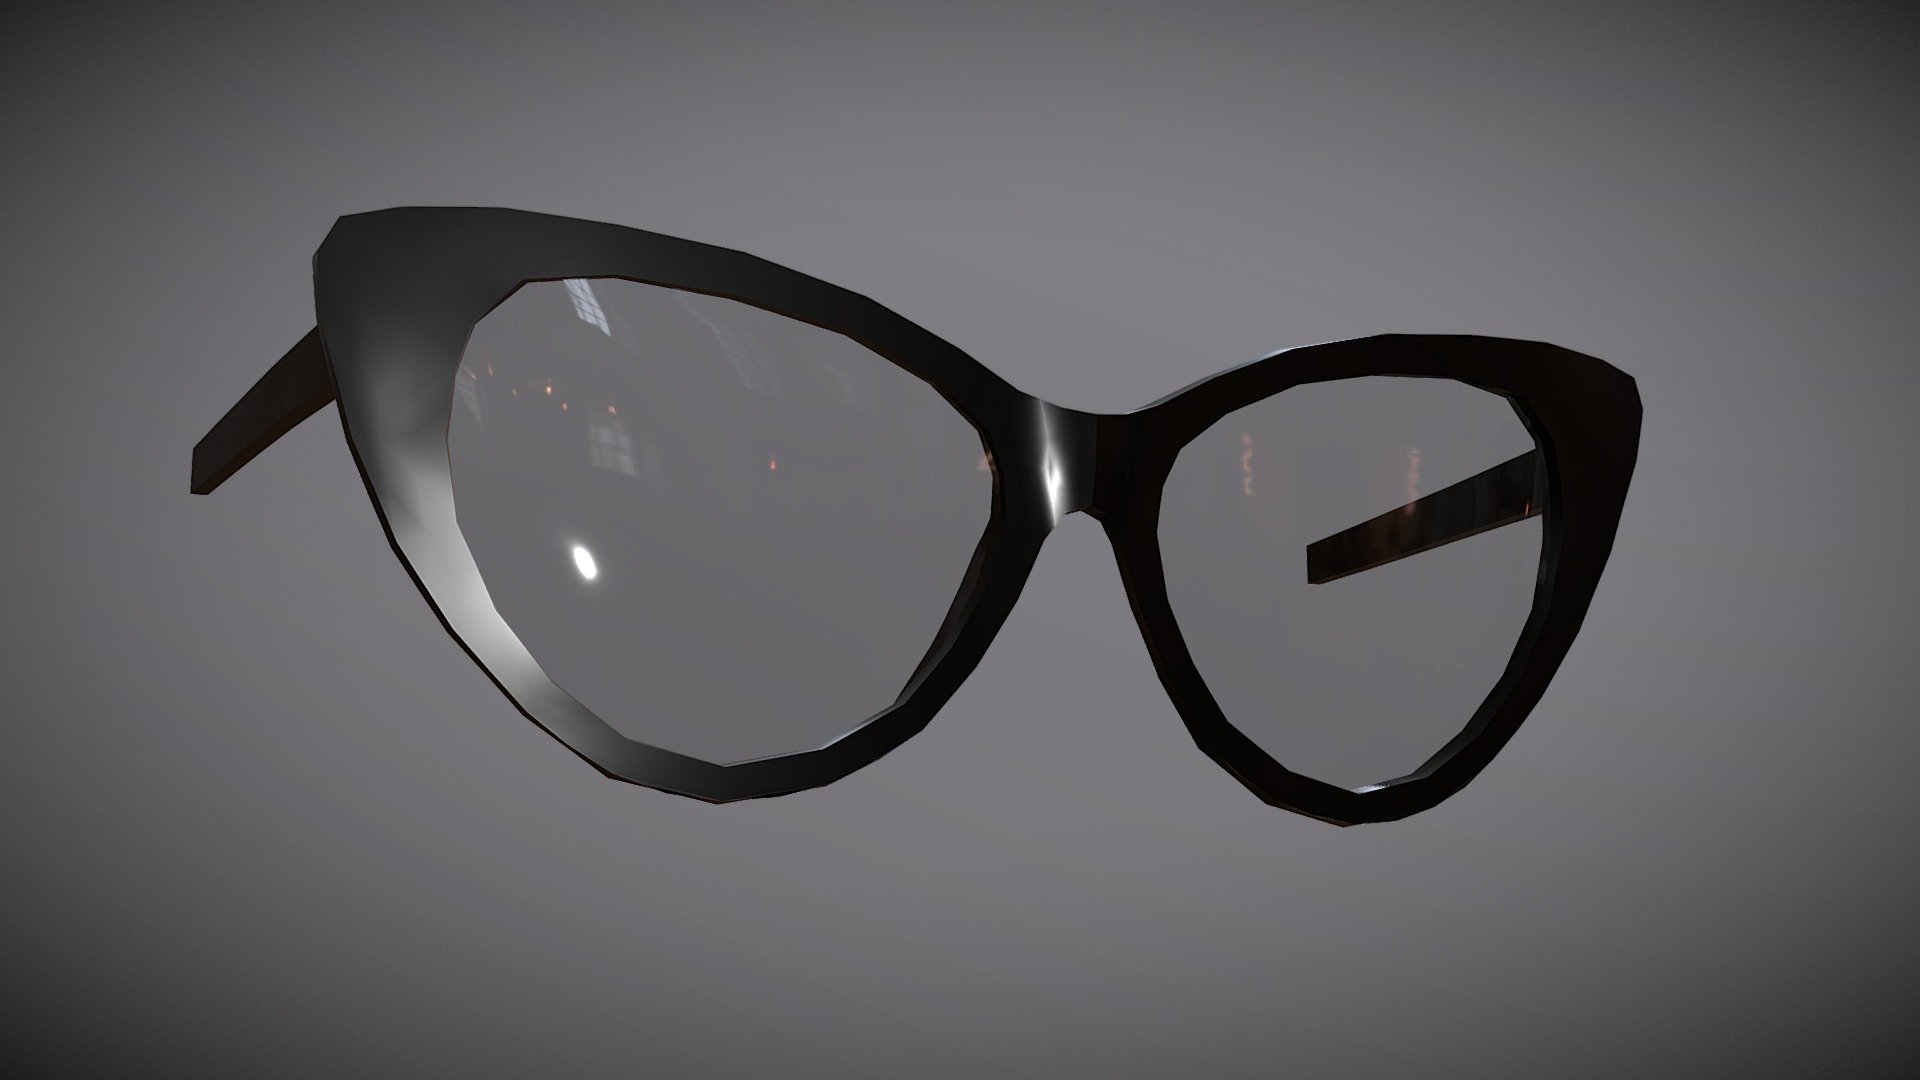 Carrera Sunglasses Online - Buy Sunglasses for Men and Women